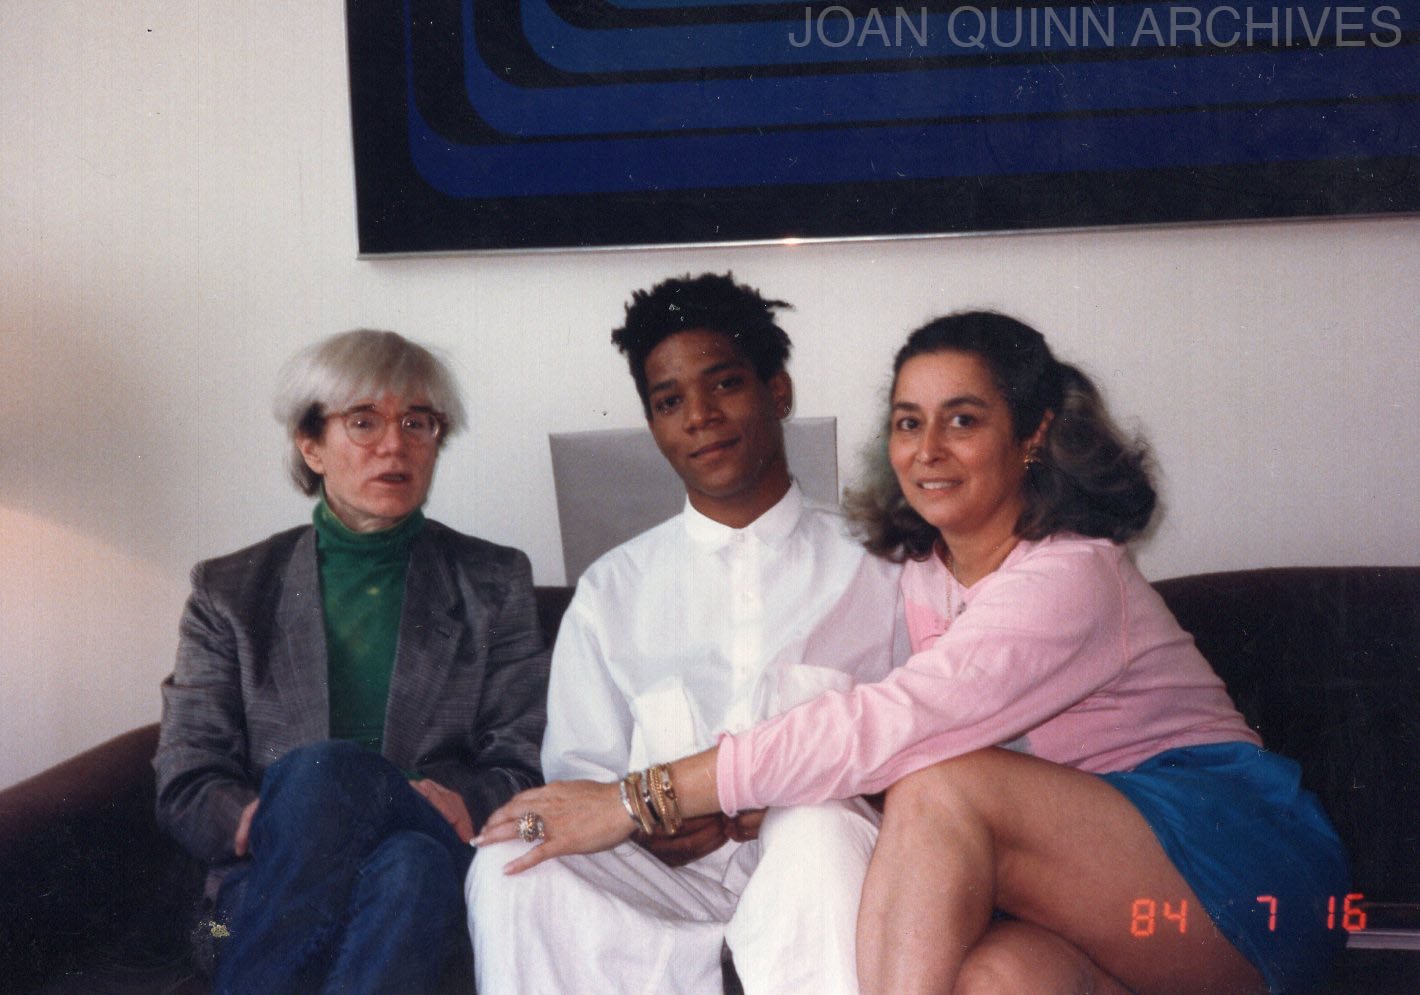 Andy Warhol, Jean-Michel Basquiat and Joan, 1984.